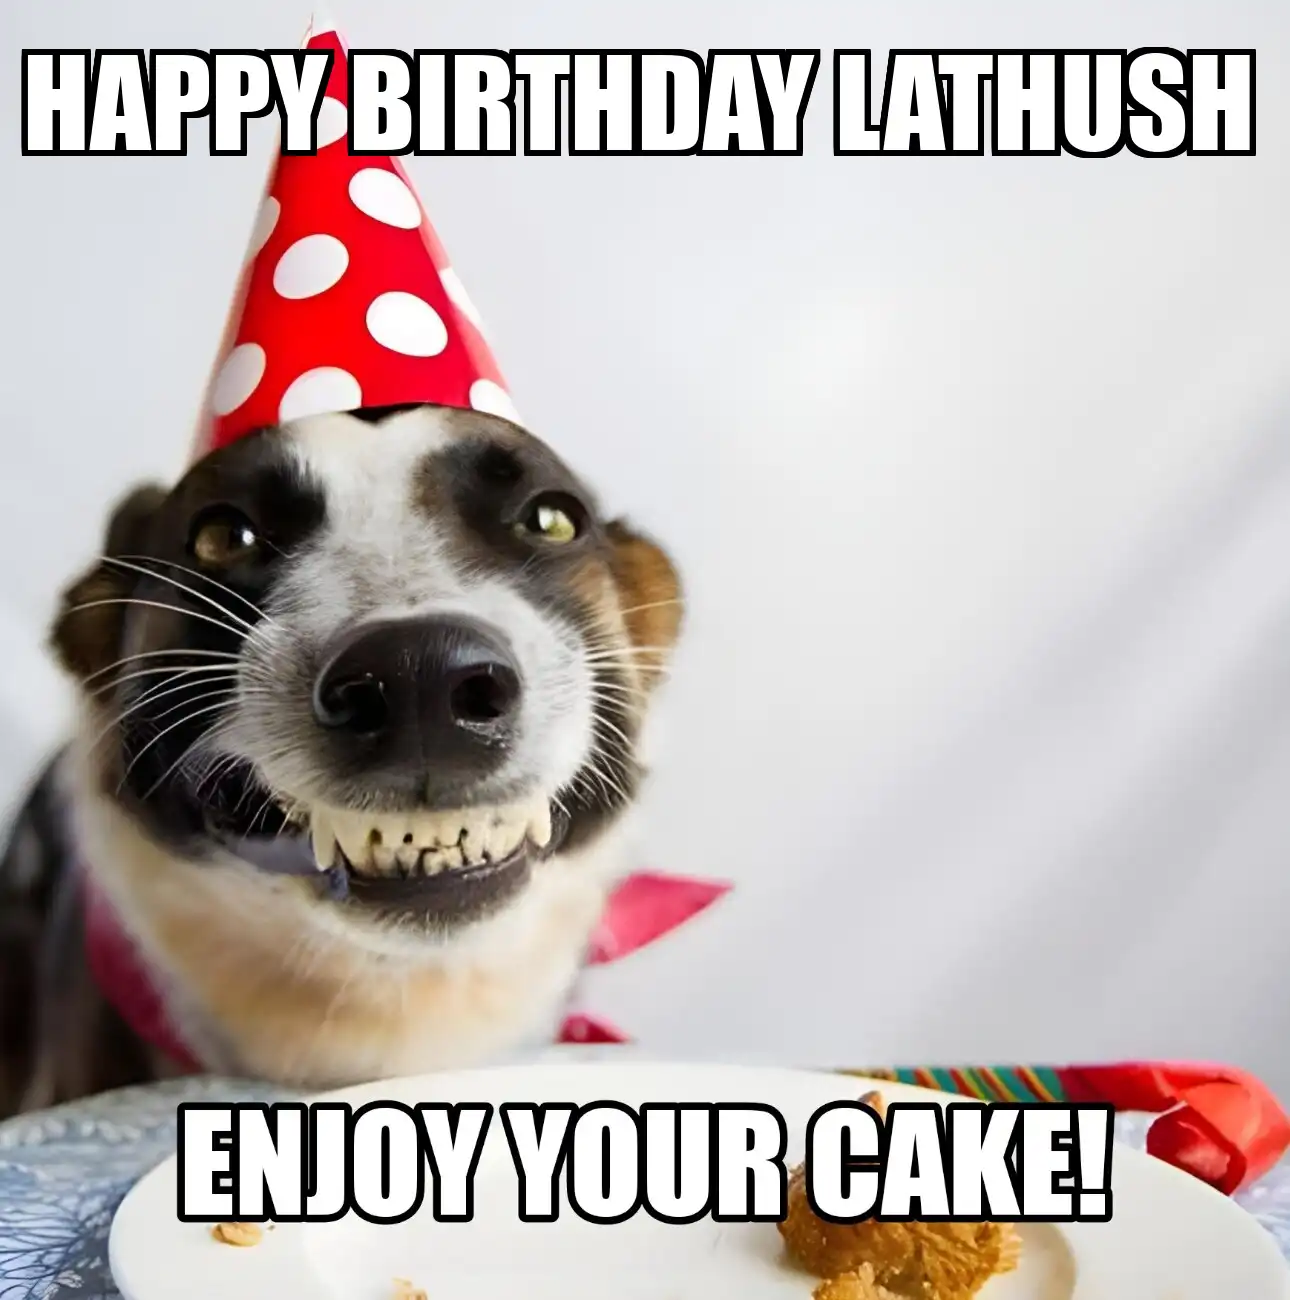 Happy Birthday Lathush Enjoy Your Cake Dog Meme